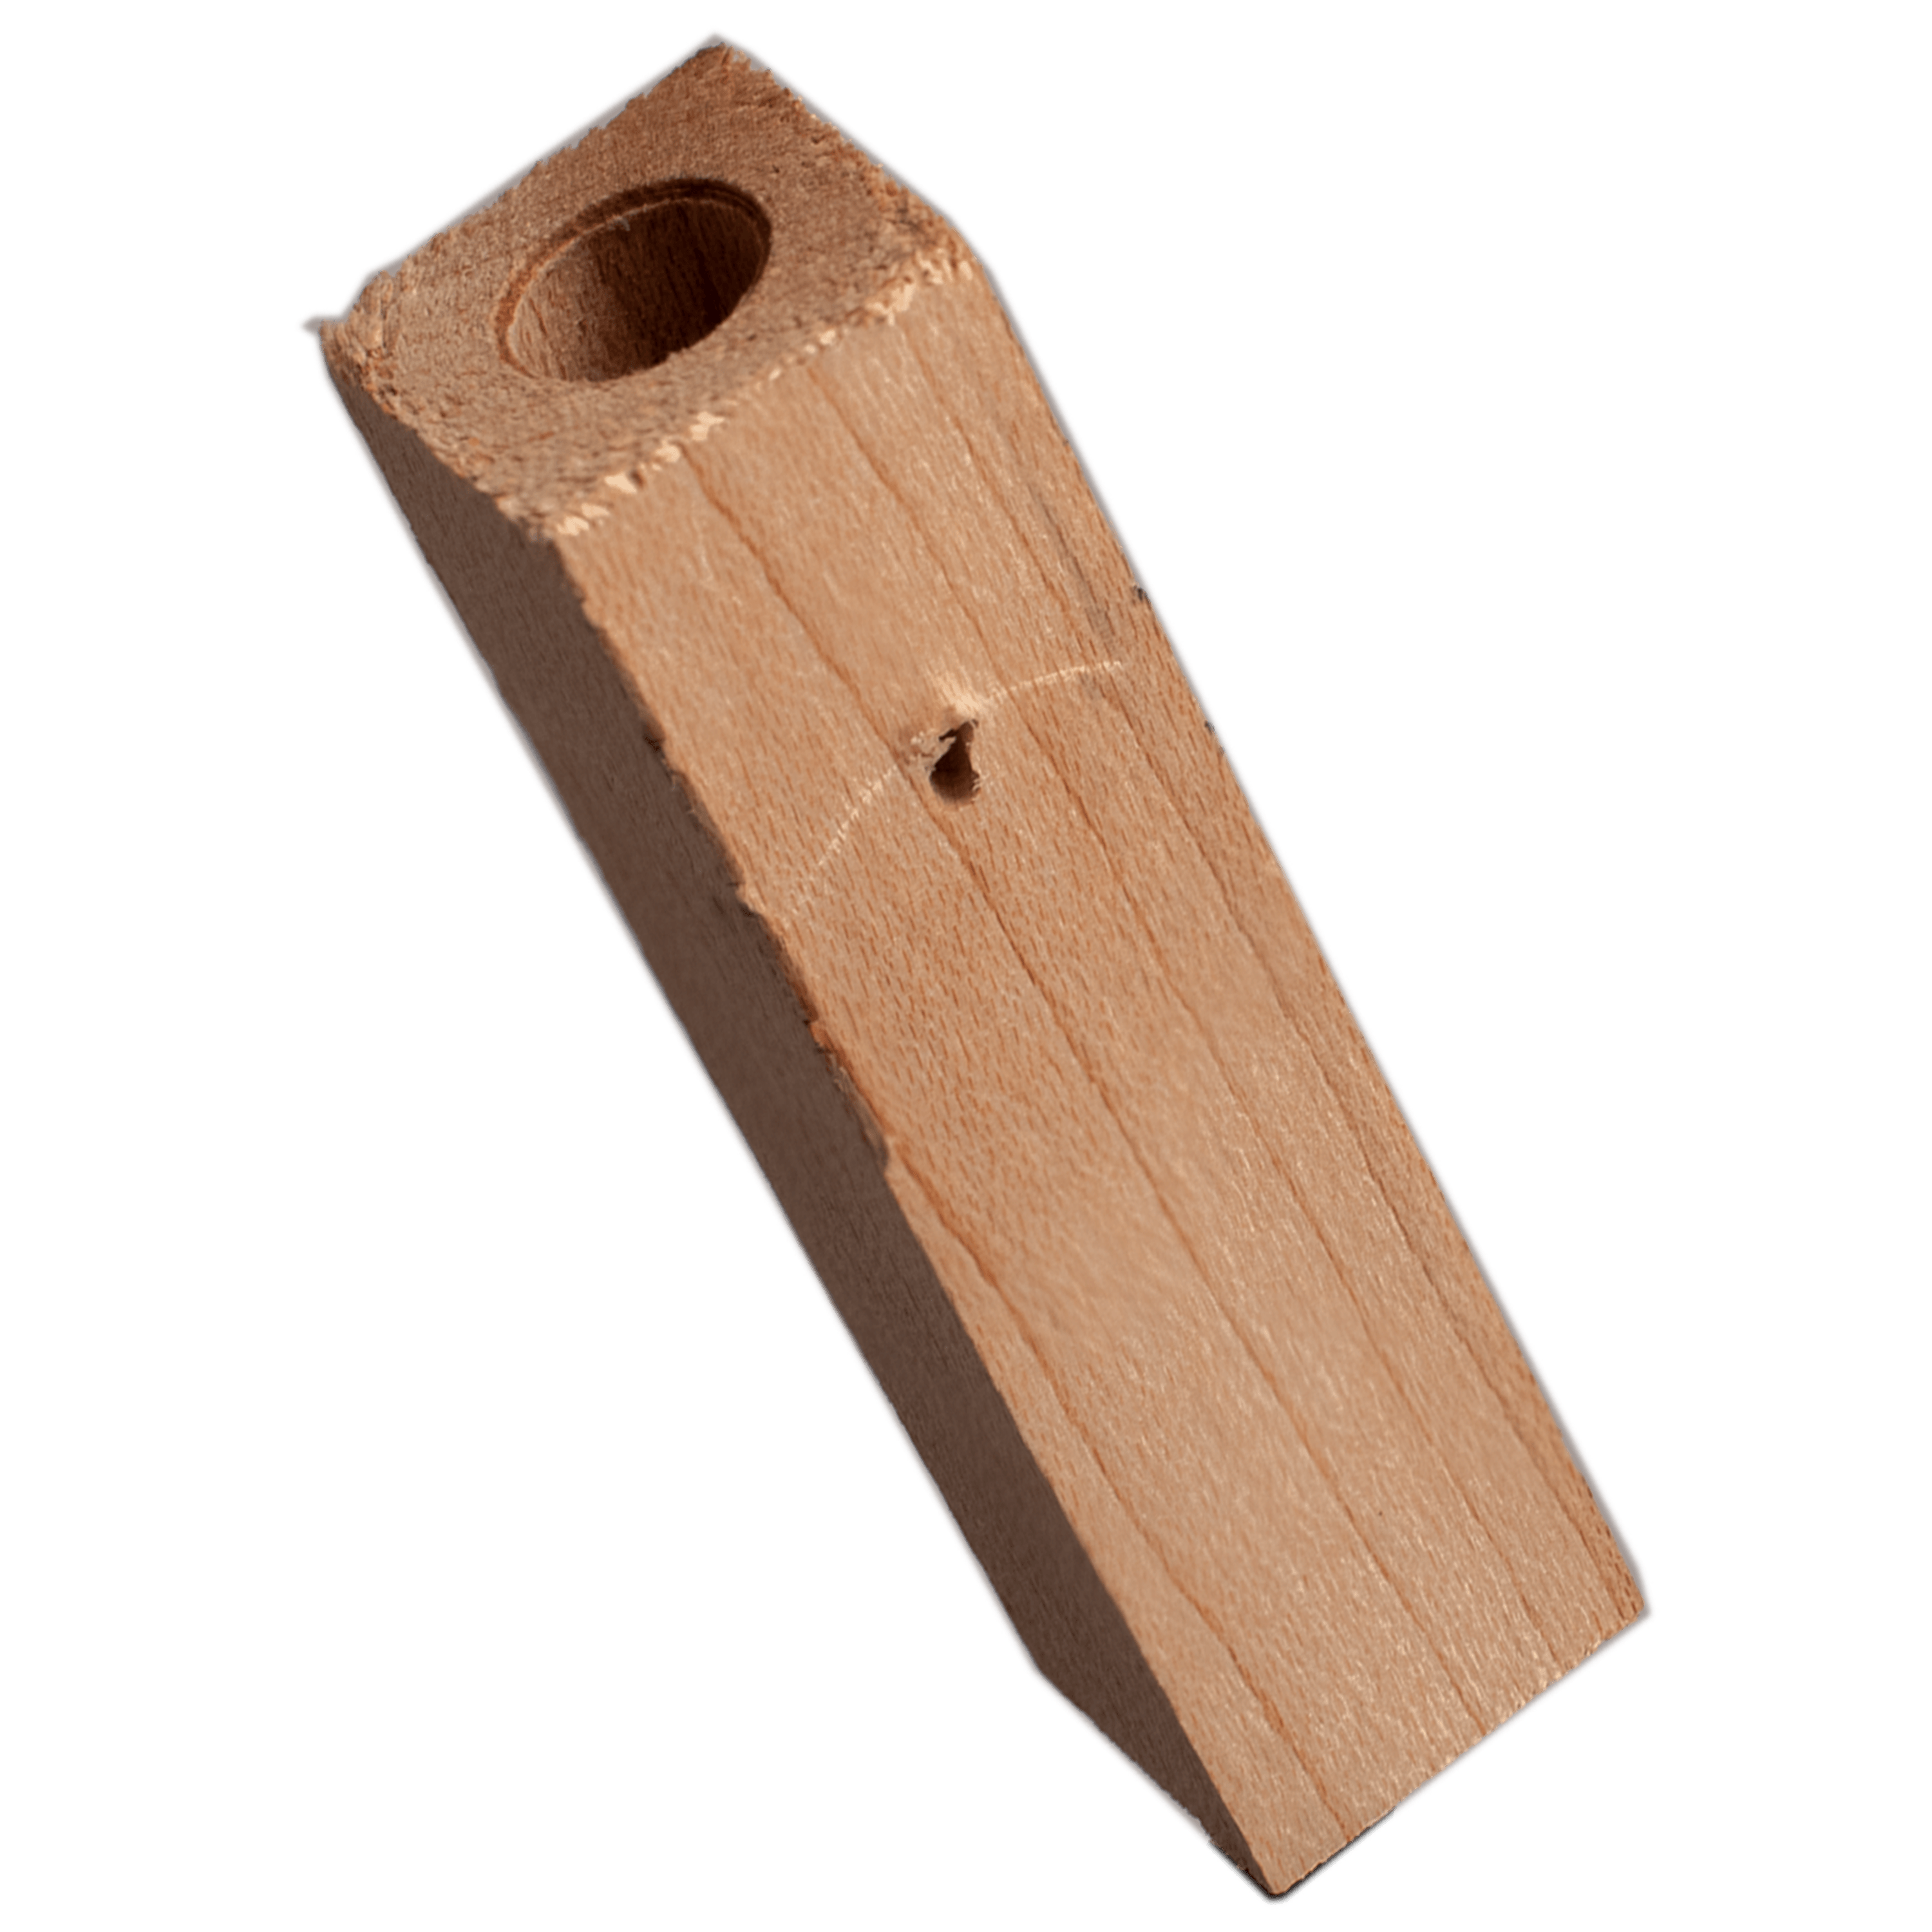 Light wood make your own wood vaporizer body